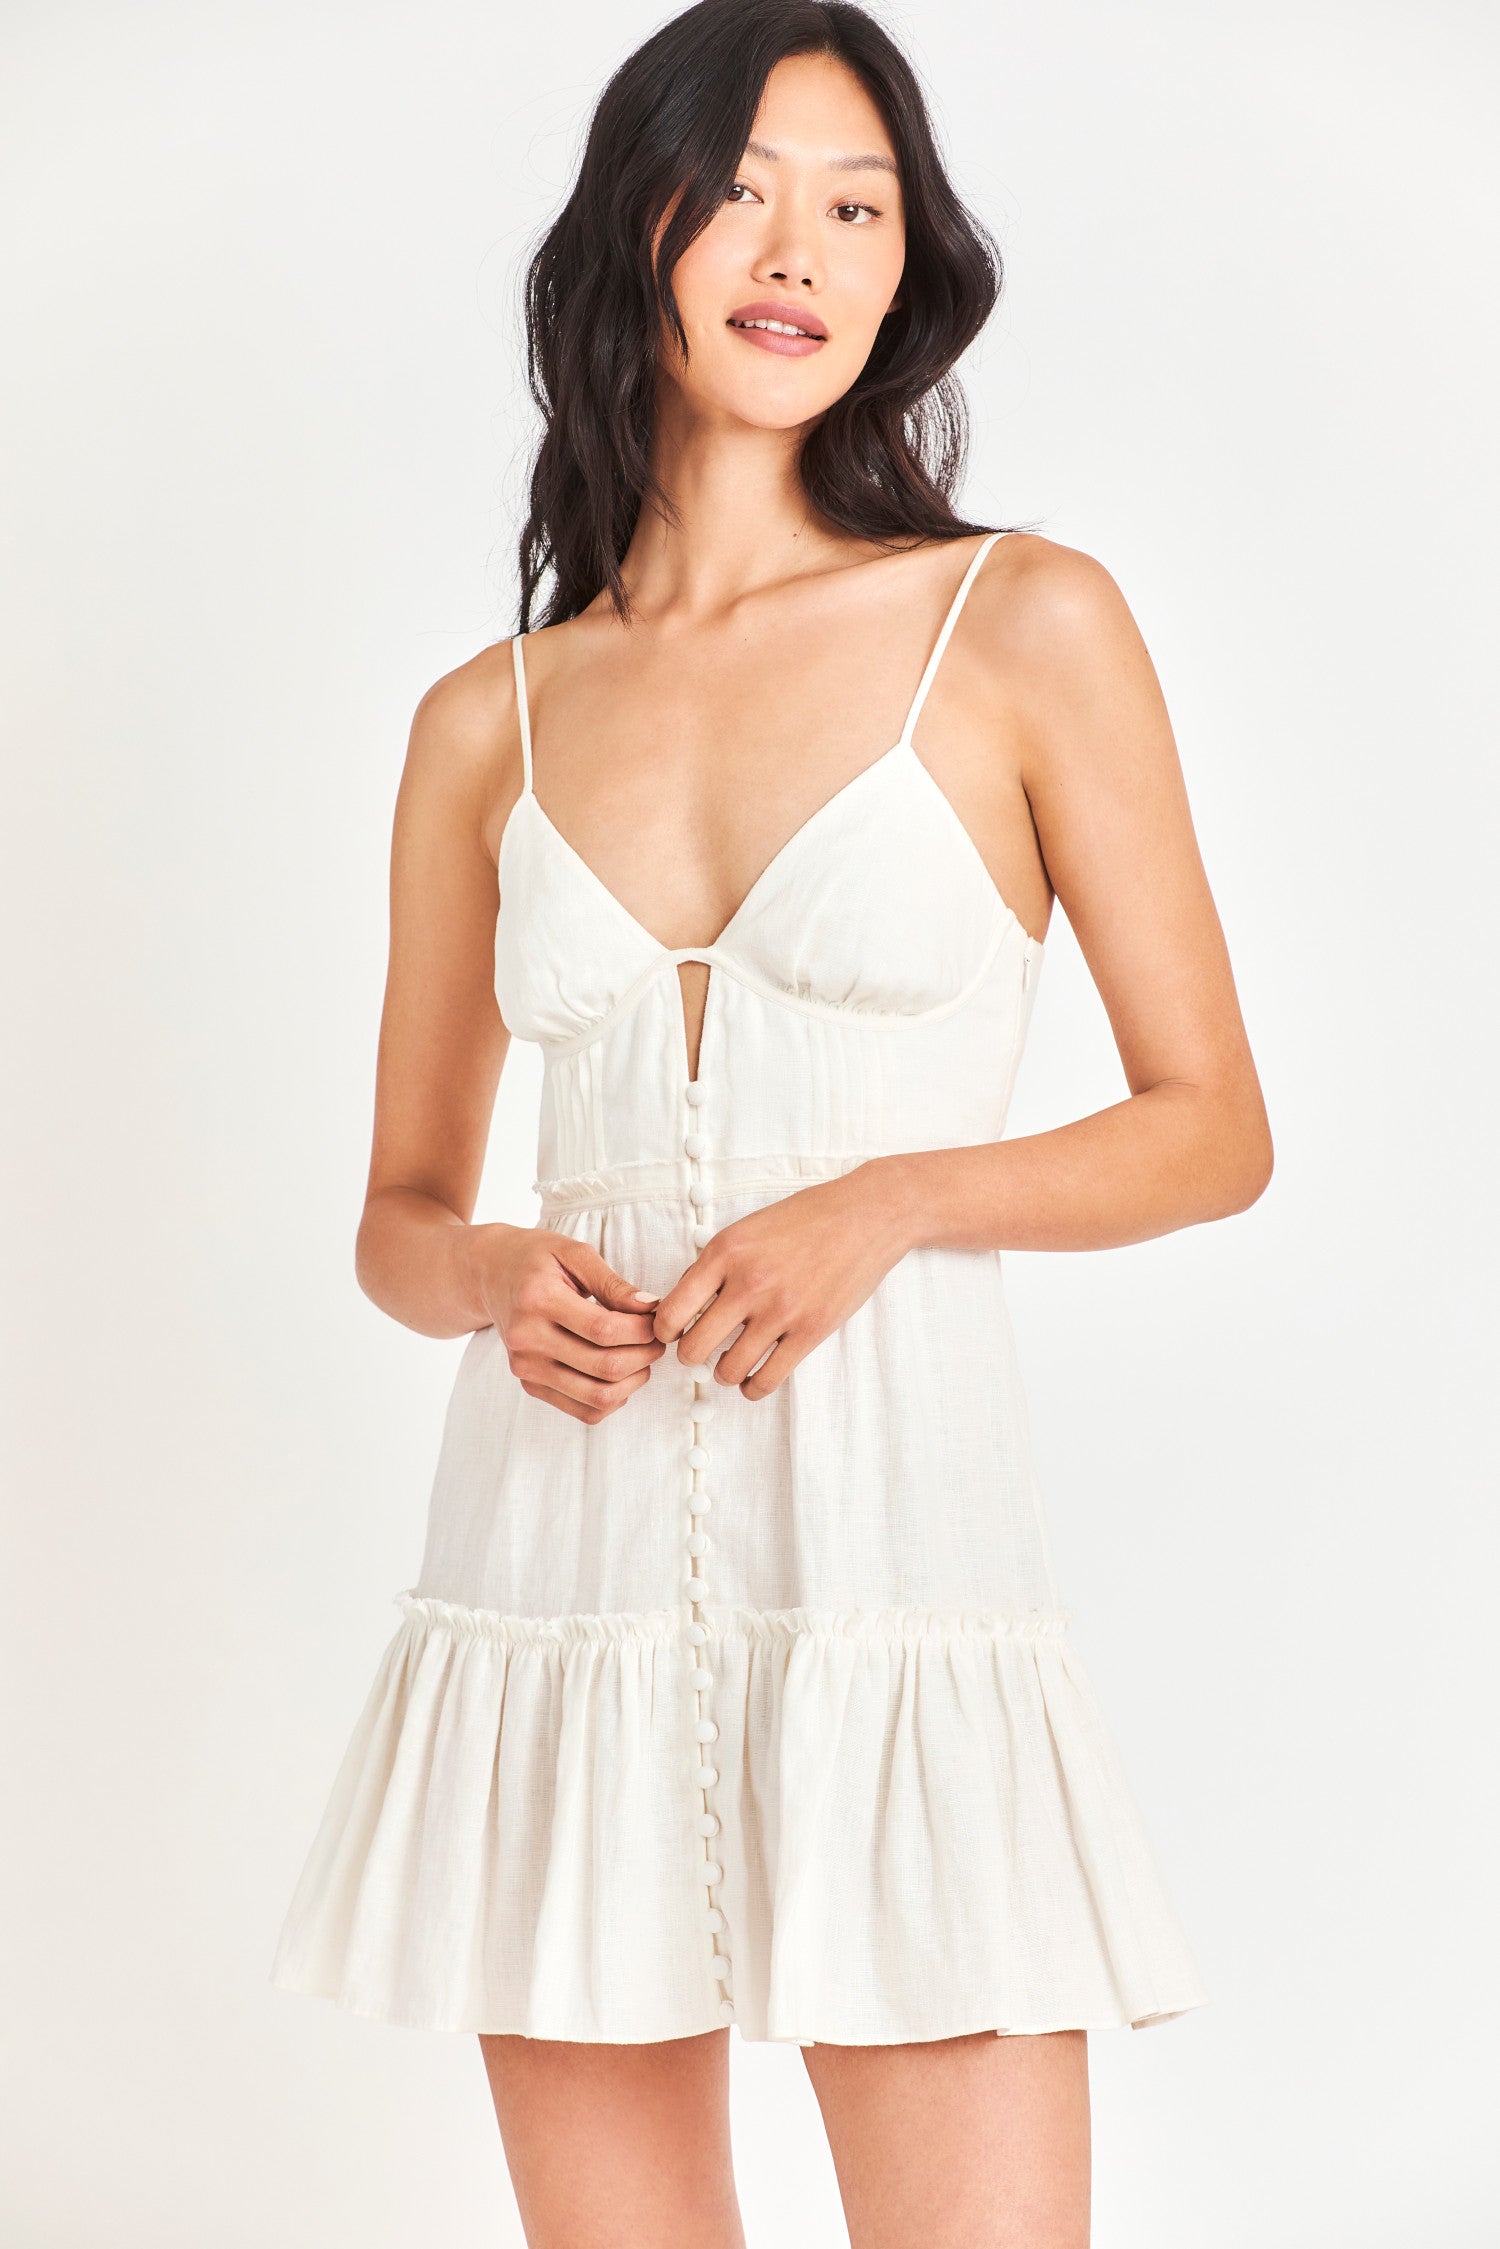 Model wearing white Maple Dress